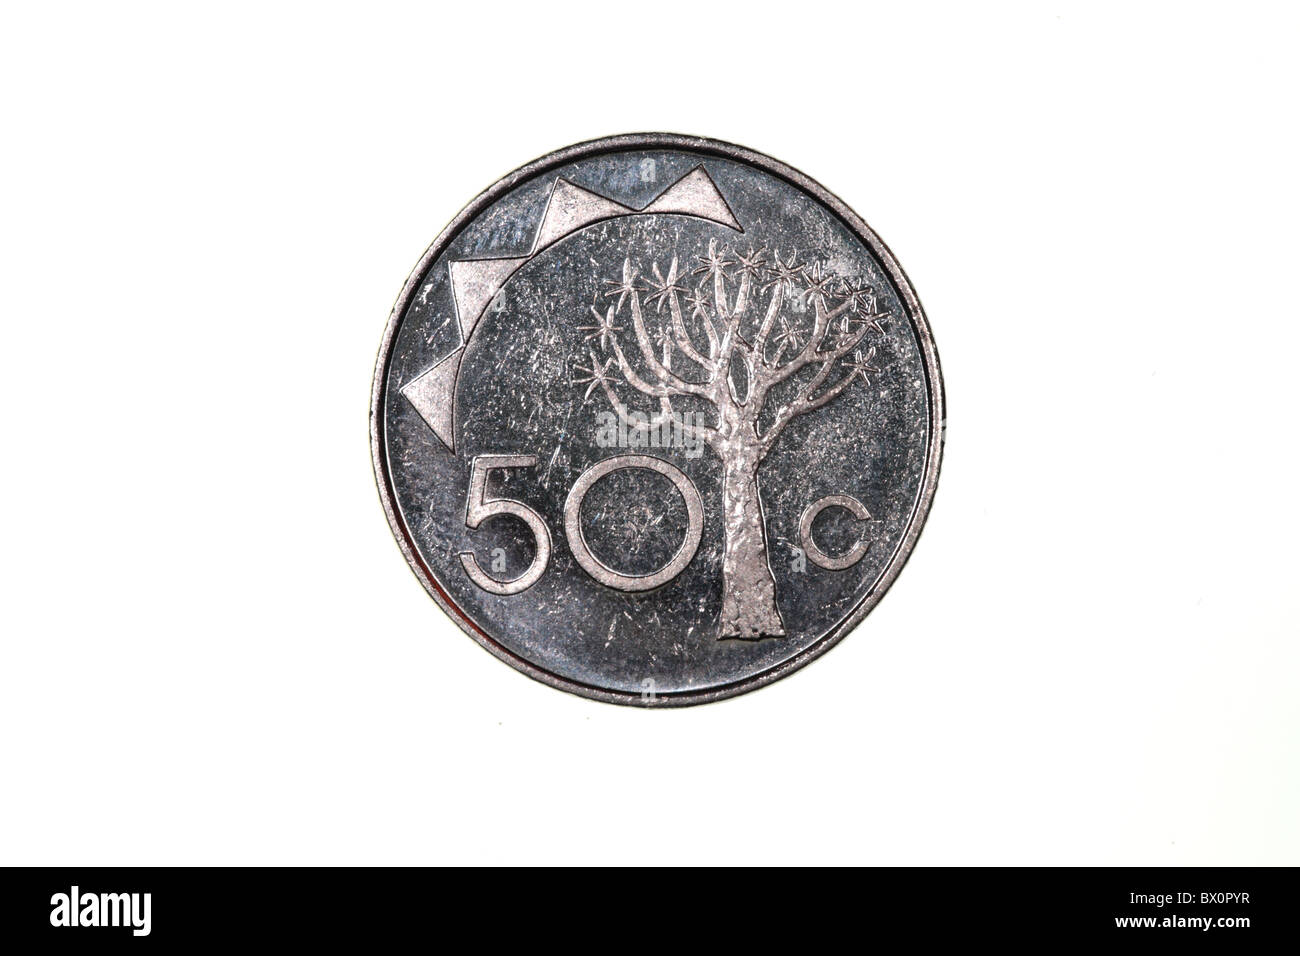 Namibian coin Stock Photo